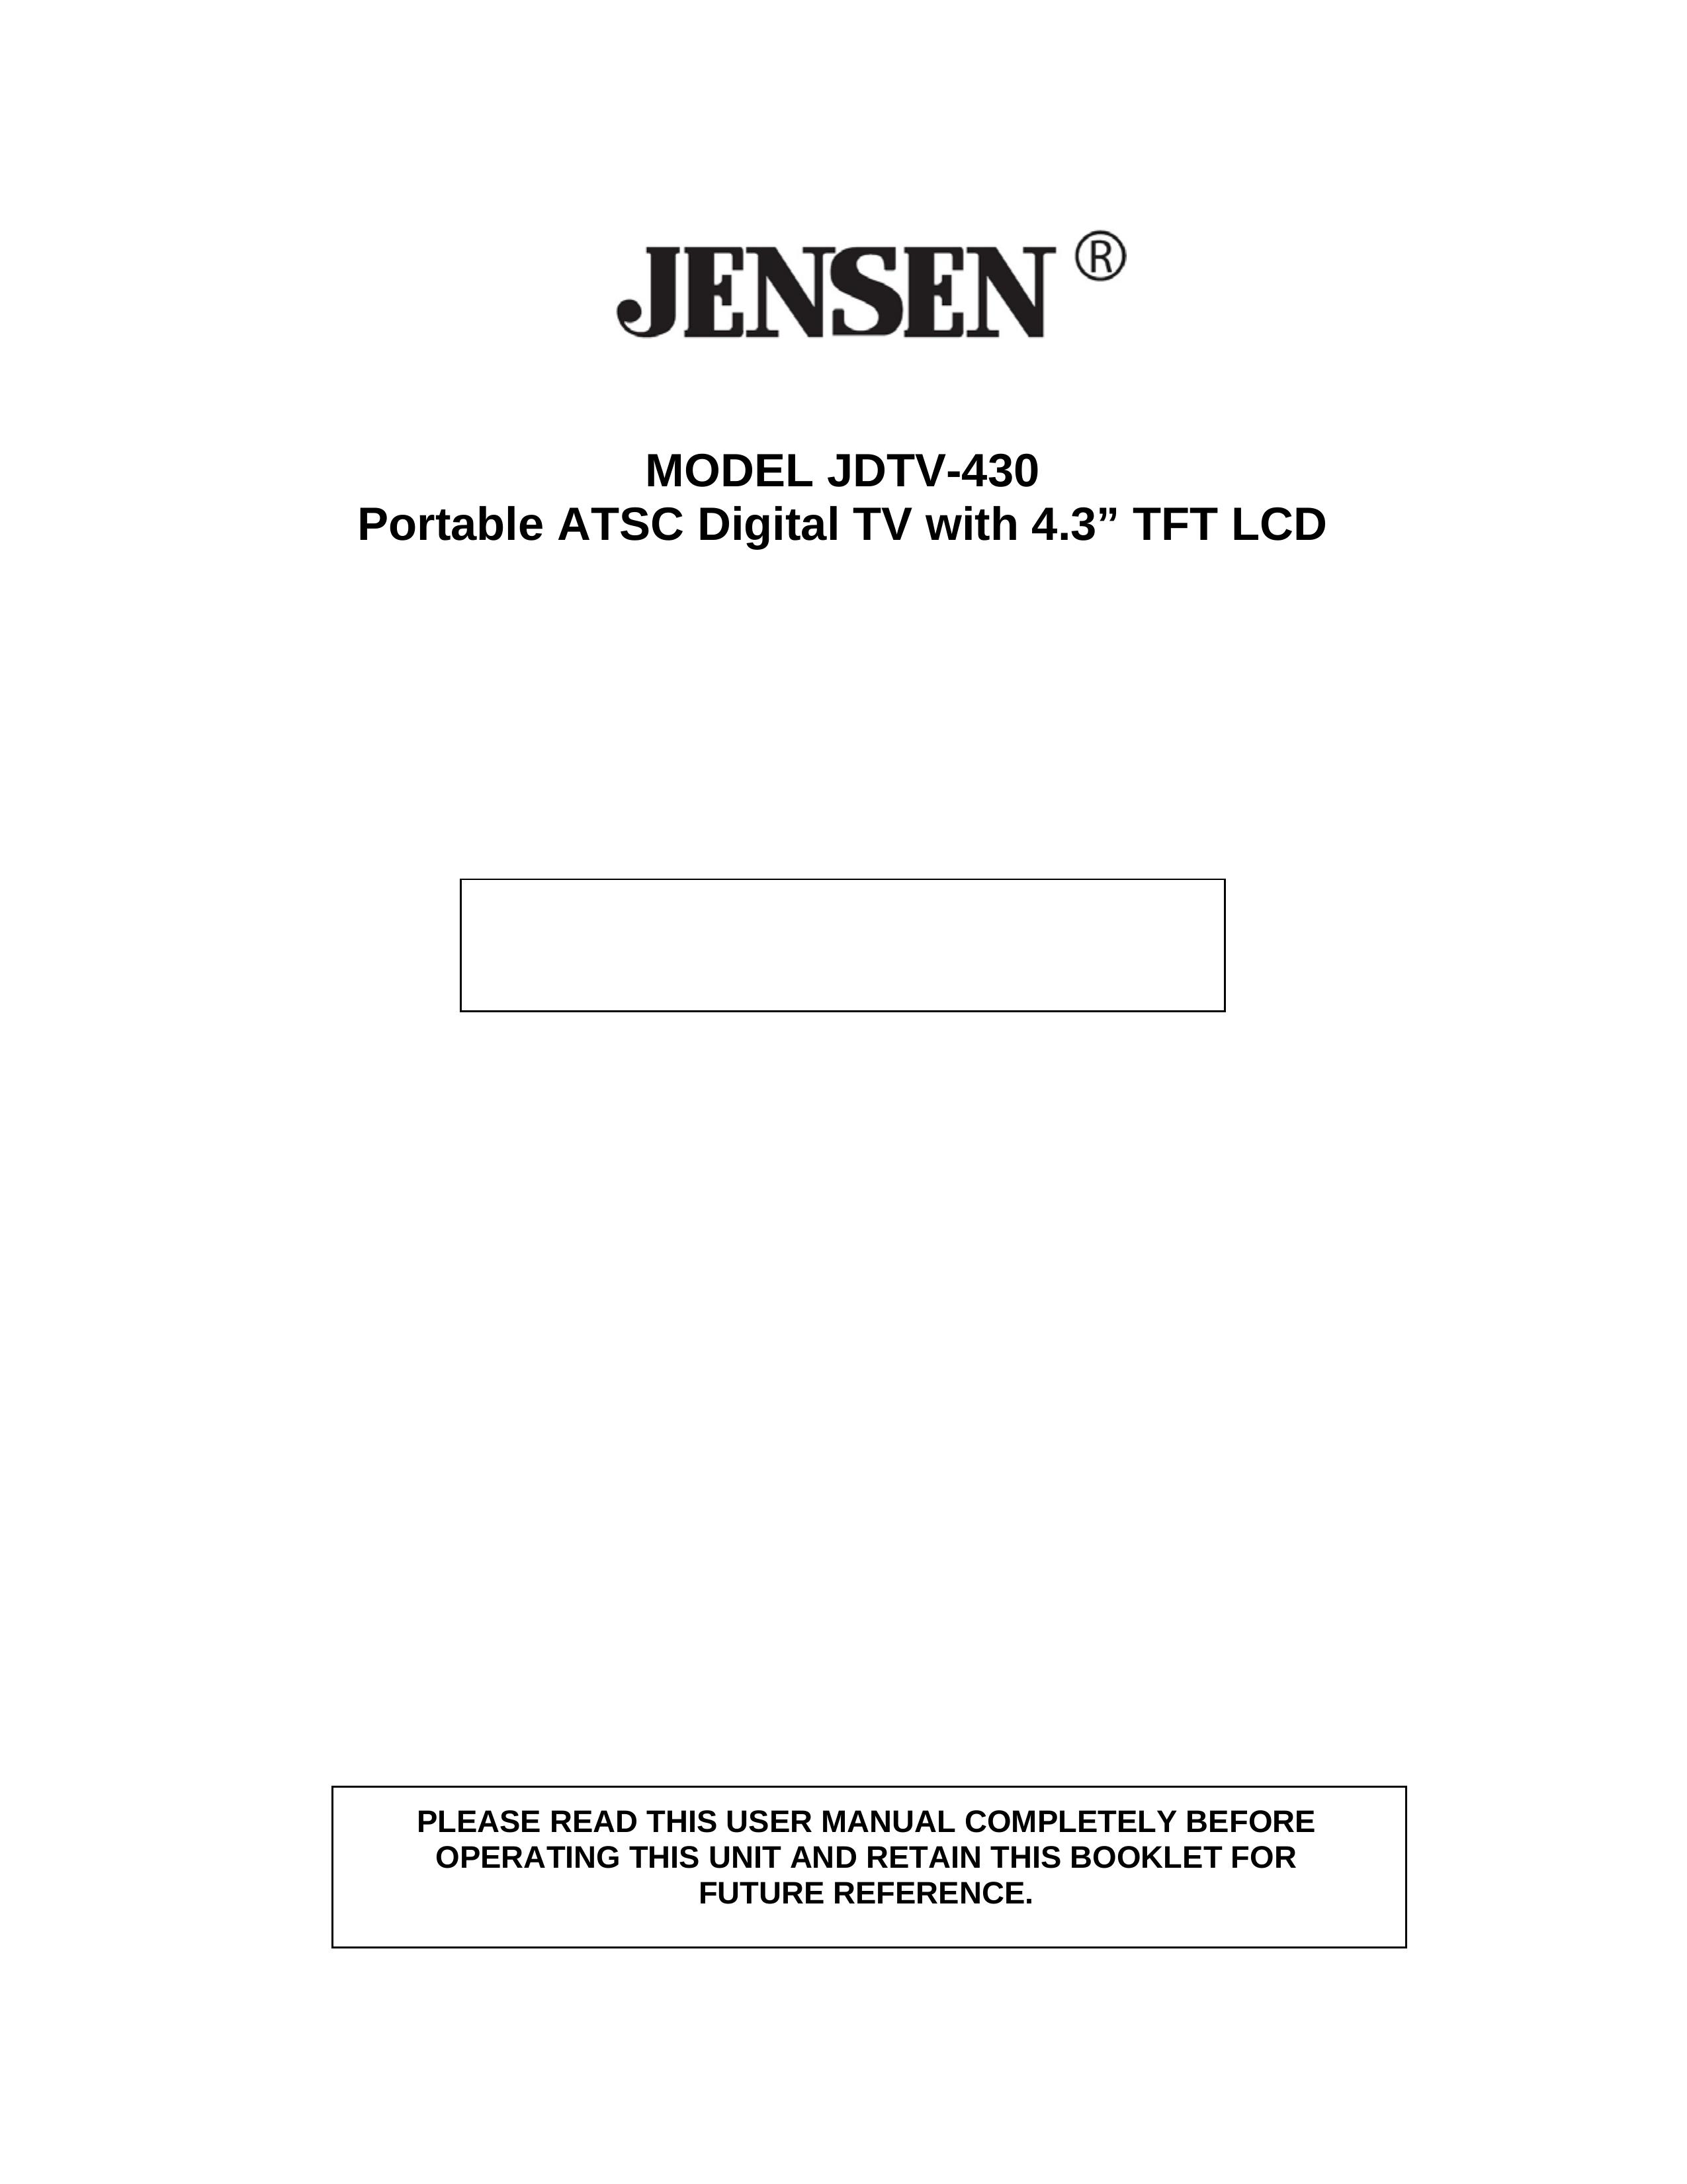 Jensen JDTV-430 Handheld TV User Manual